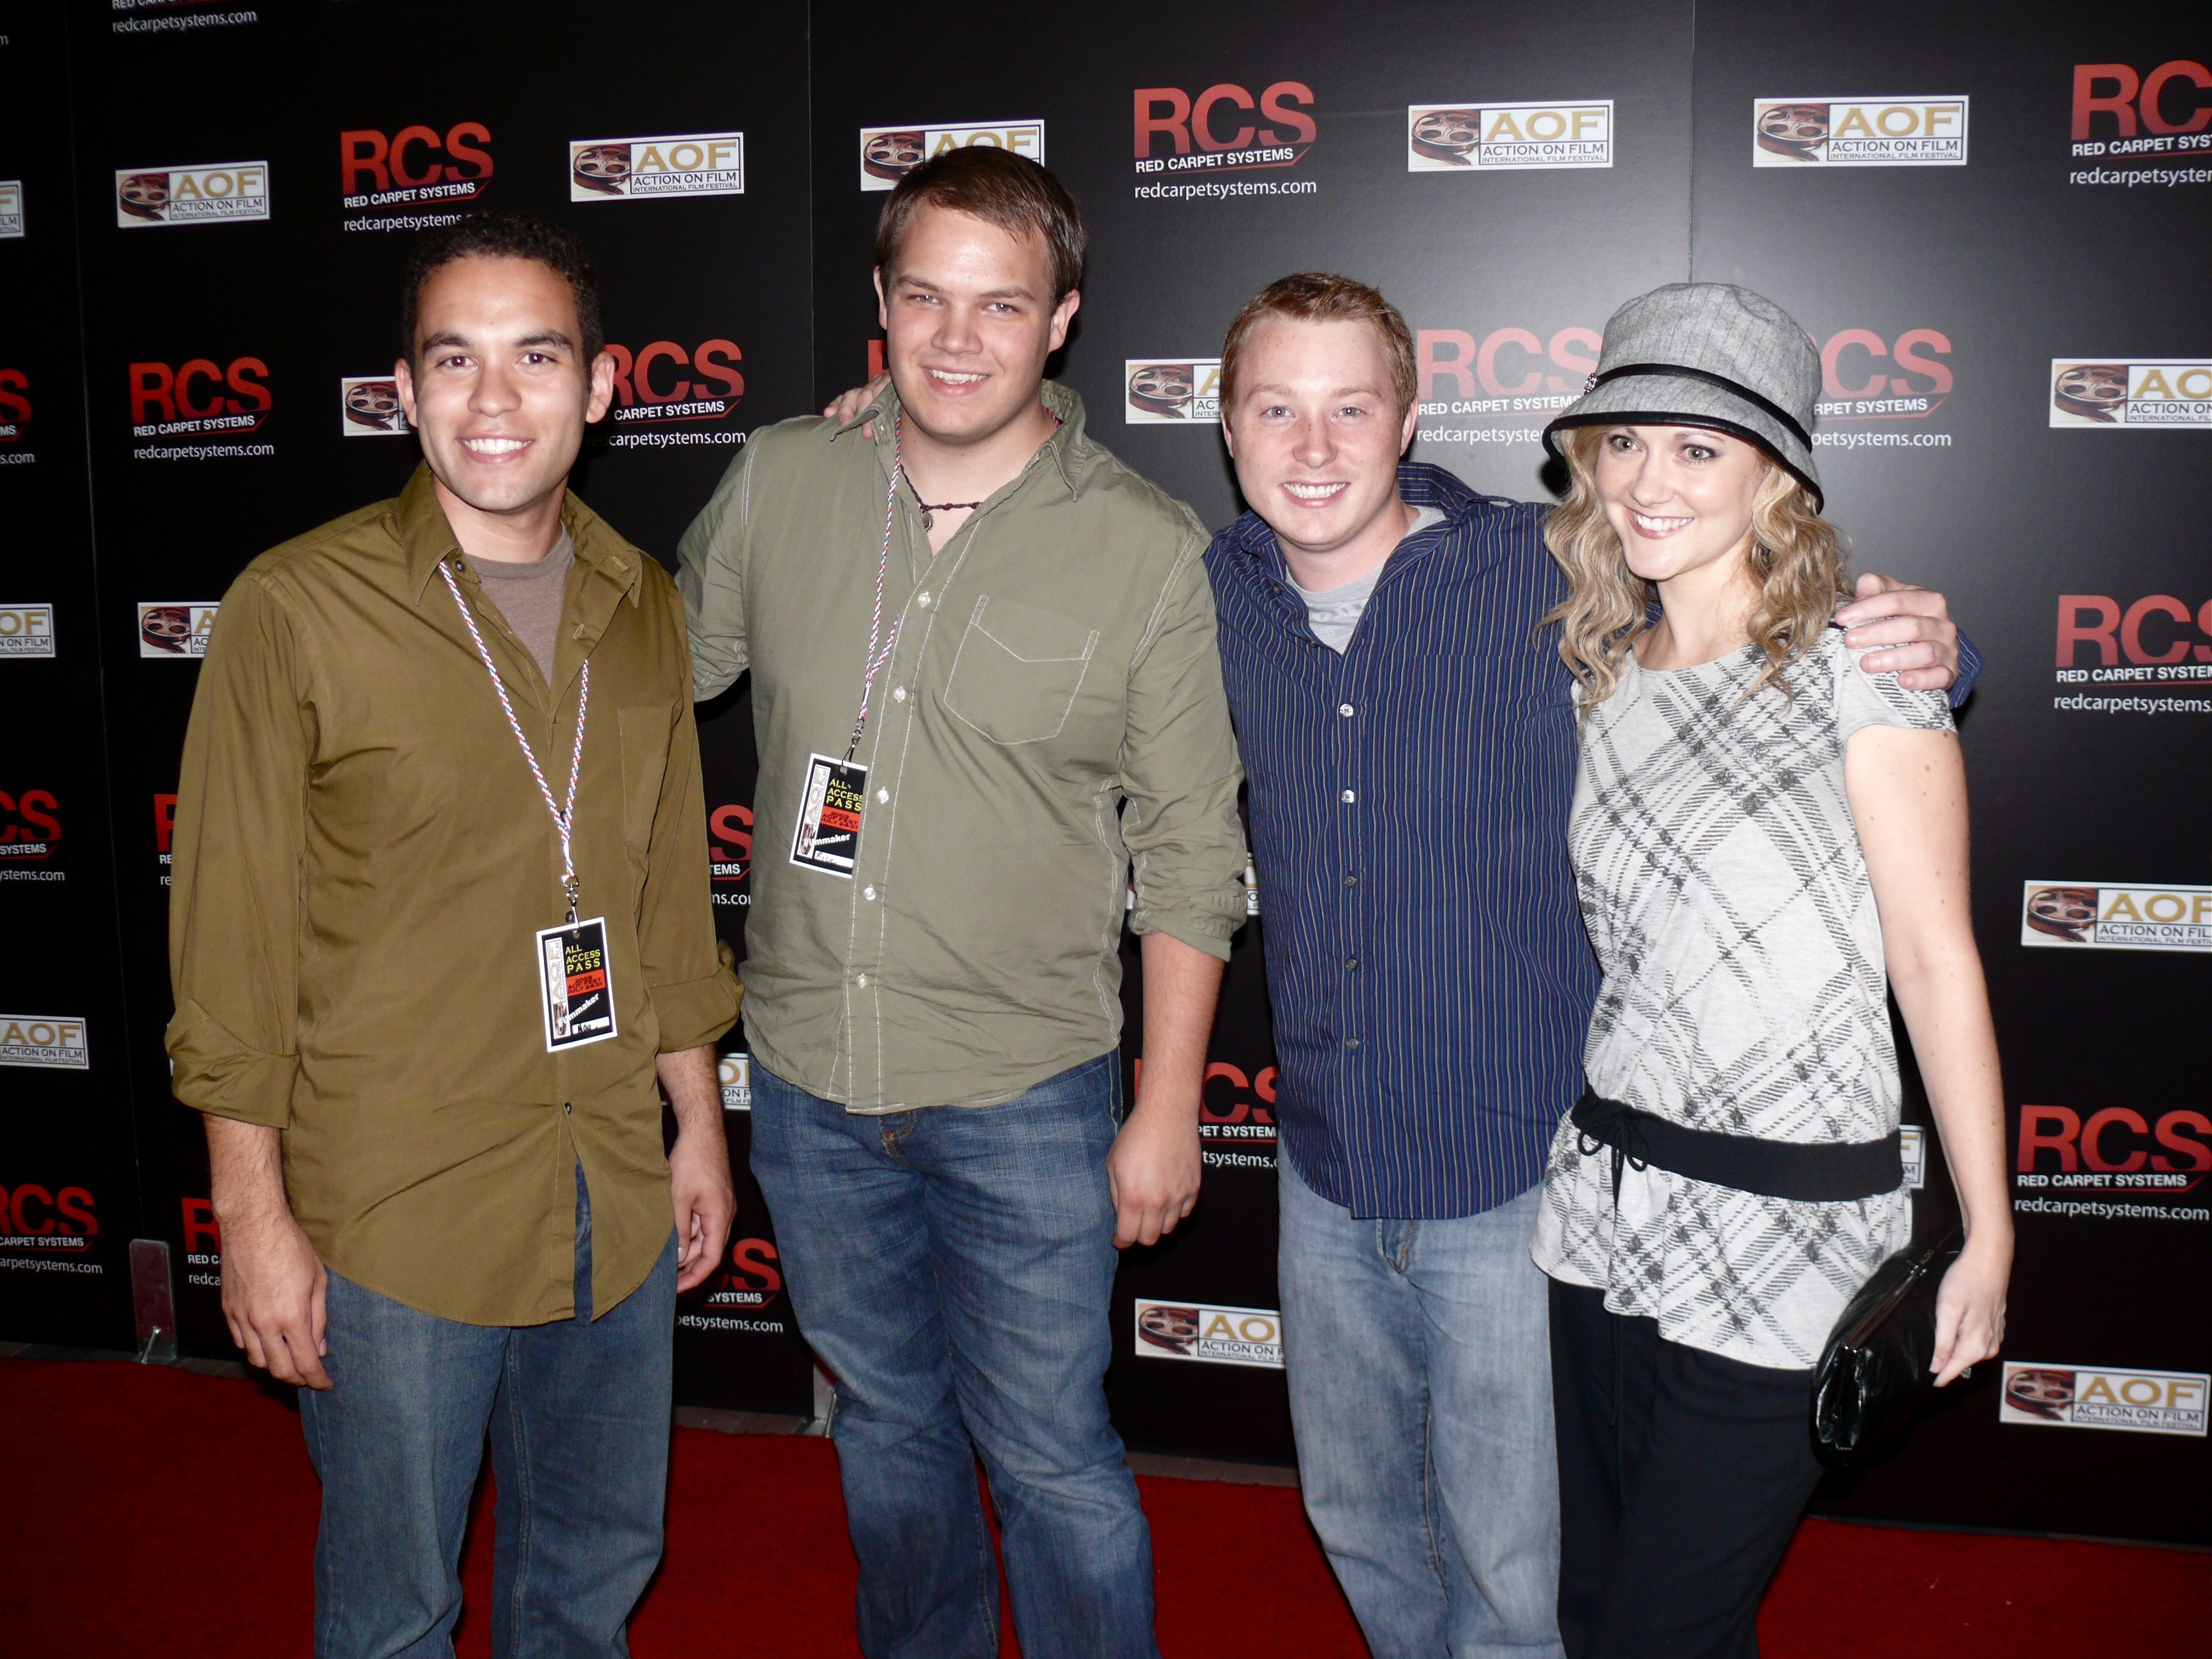 Daniel Noa, Brandon Rice, Jason Collett, and Amy Treadwell at the Action On Film Festival 2009 screening of 